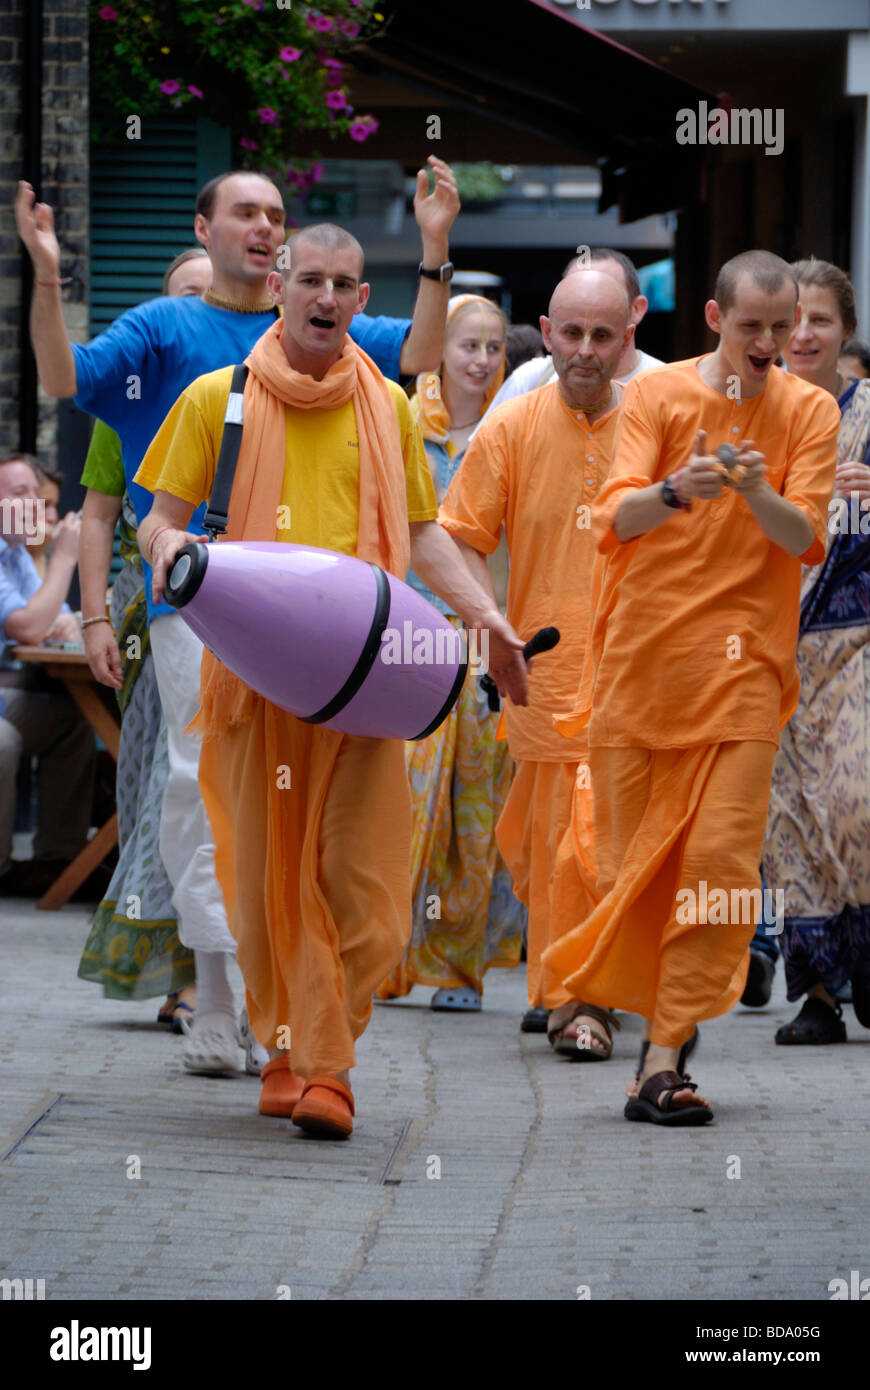 Members of the Hare Krishna movement chanting on a London Street Stock Photo